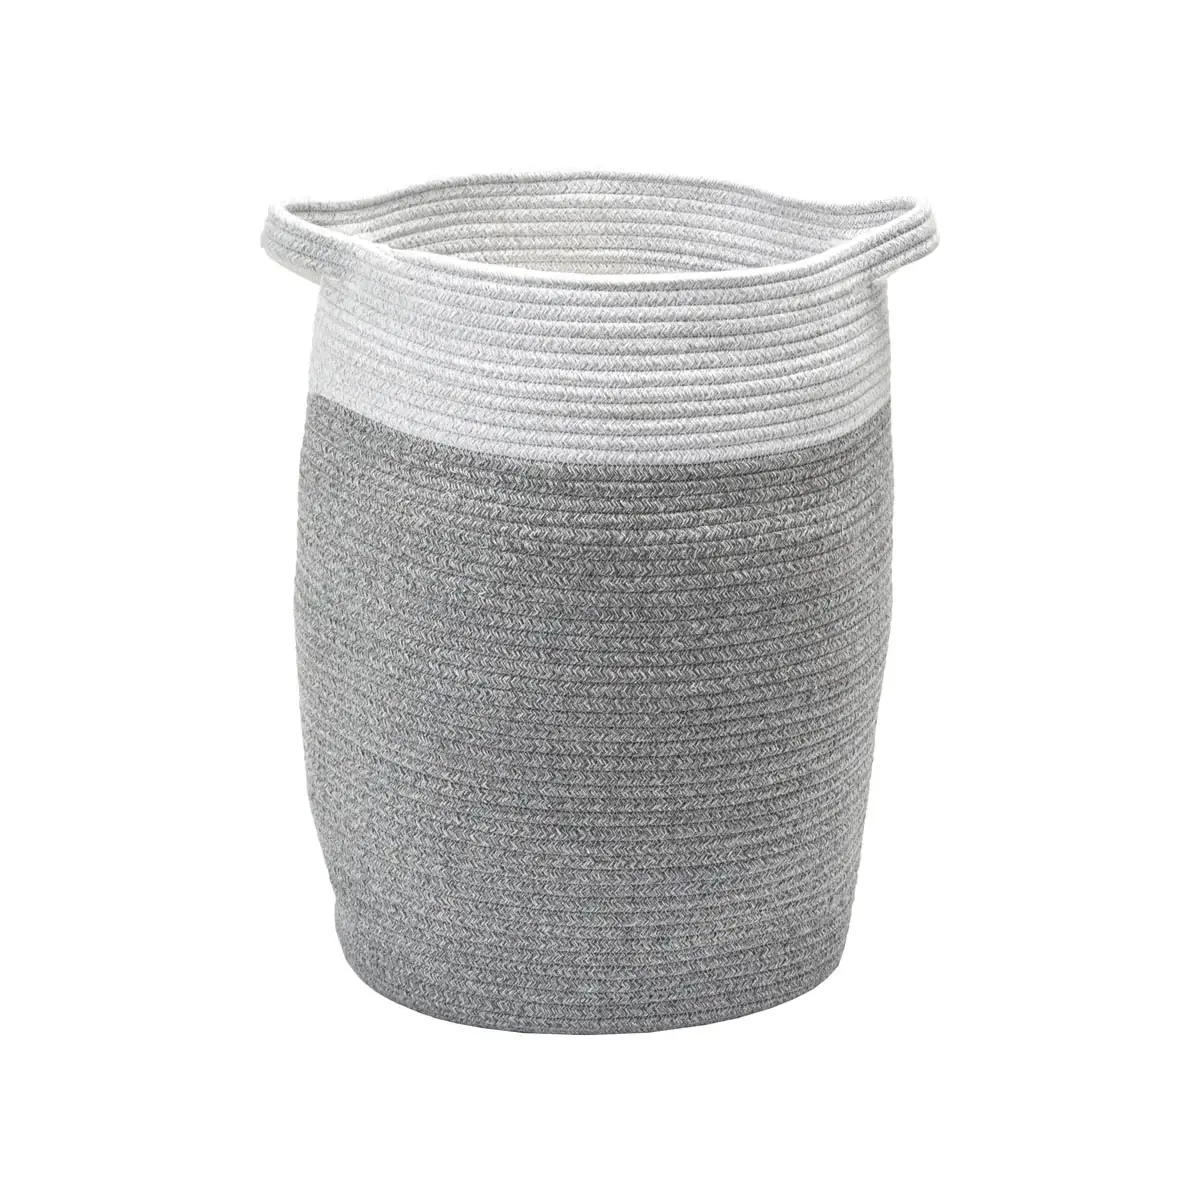 Aquanova - Osman laundry basket silver grey